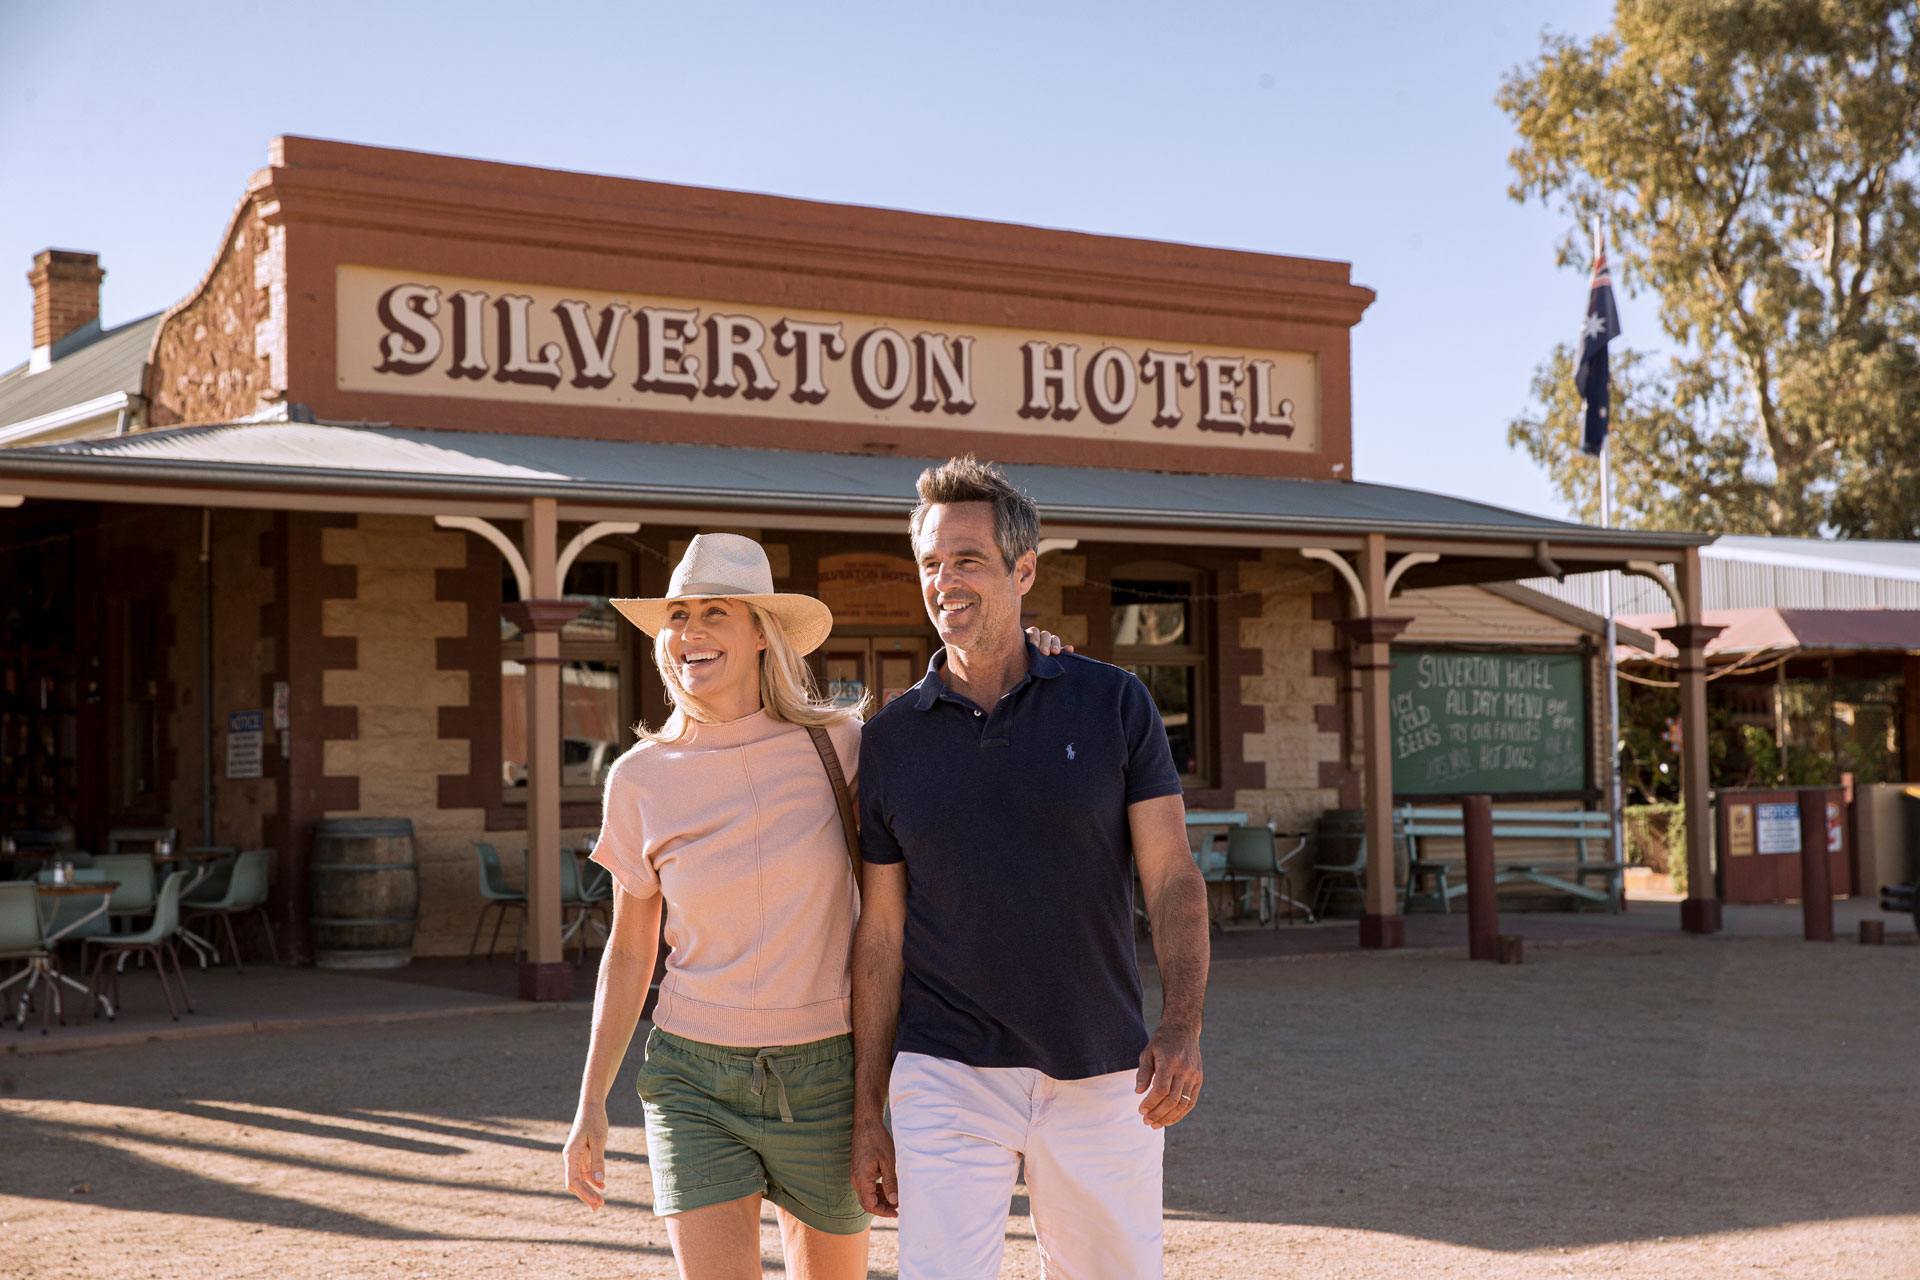 Silverton Hotel. Photo Credit: Destination NSW